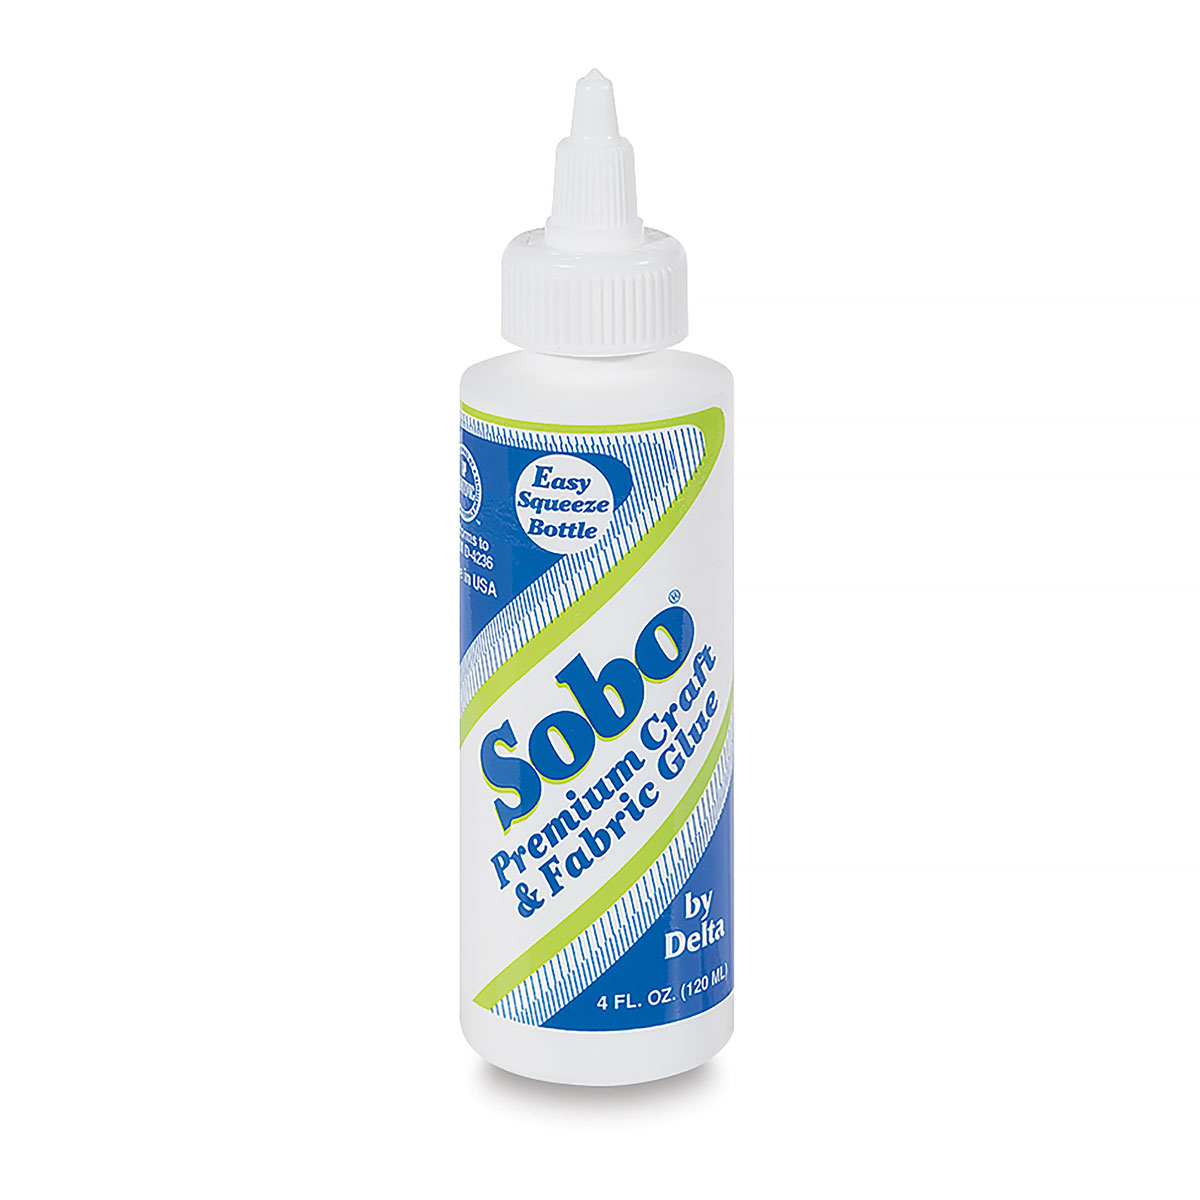 Sobo Craft Glue - Glue - Adhesives - Notions